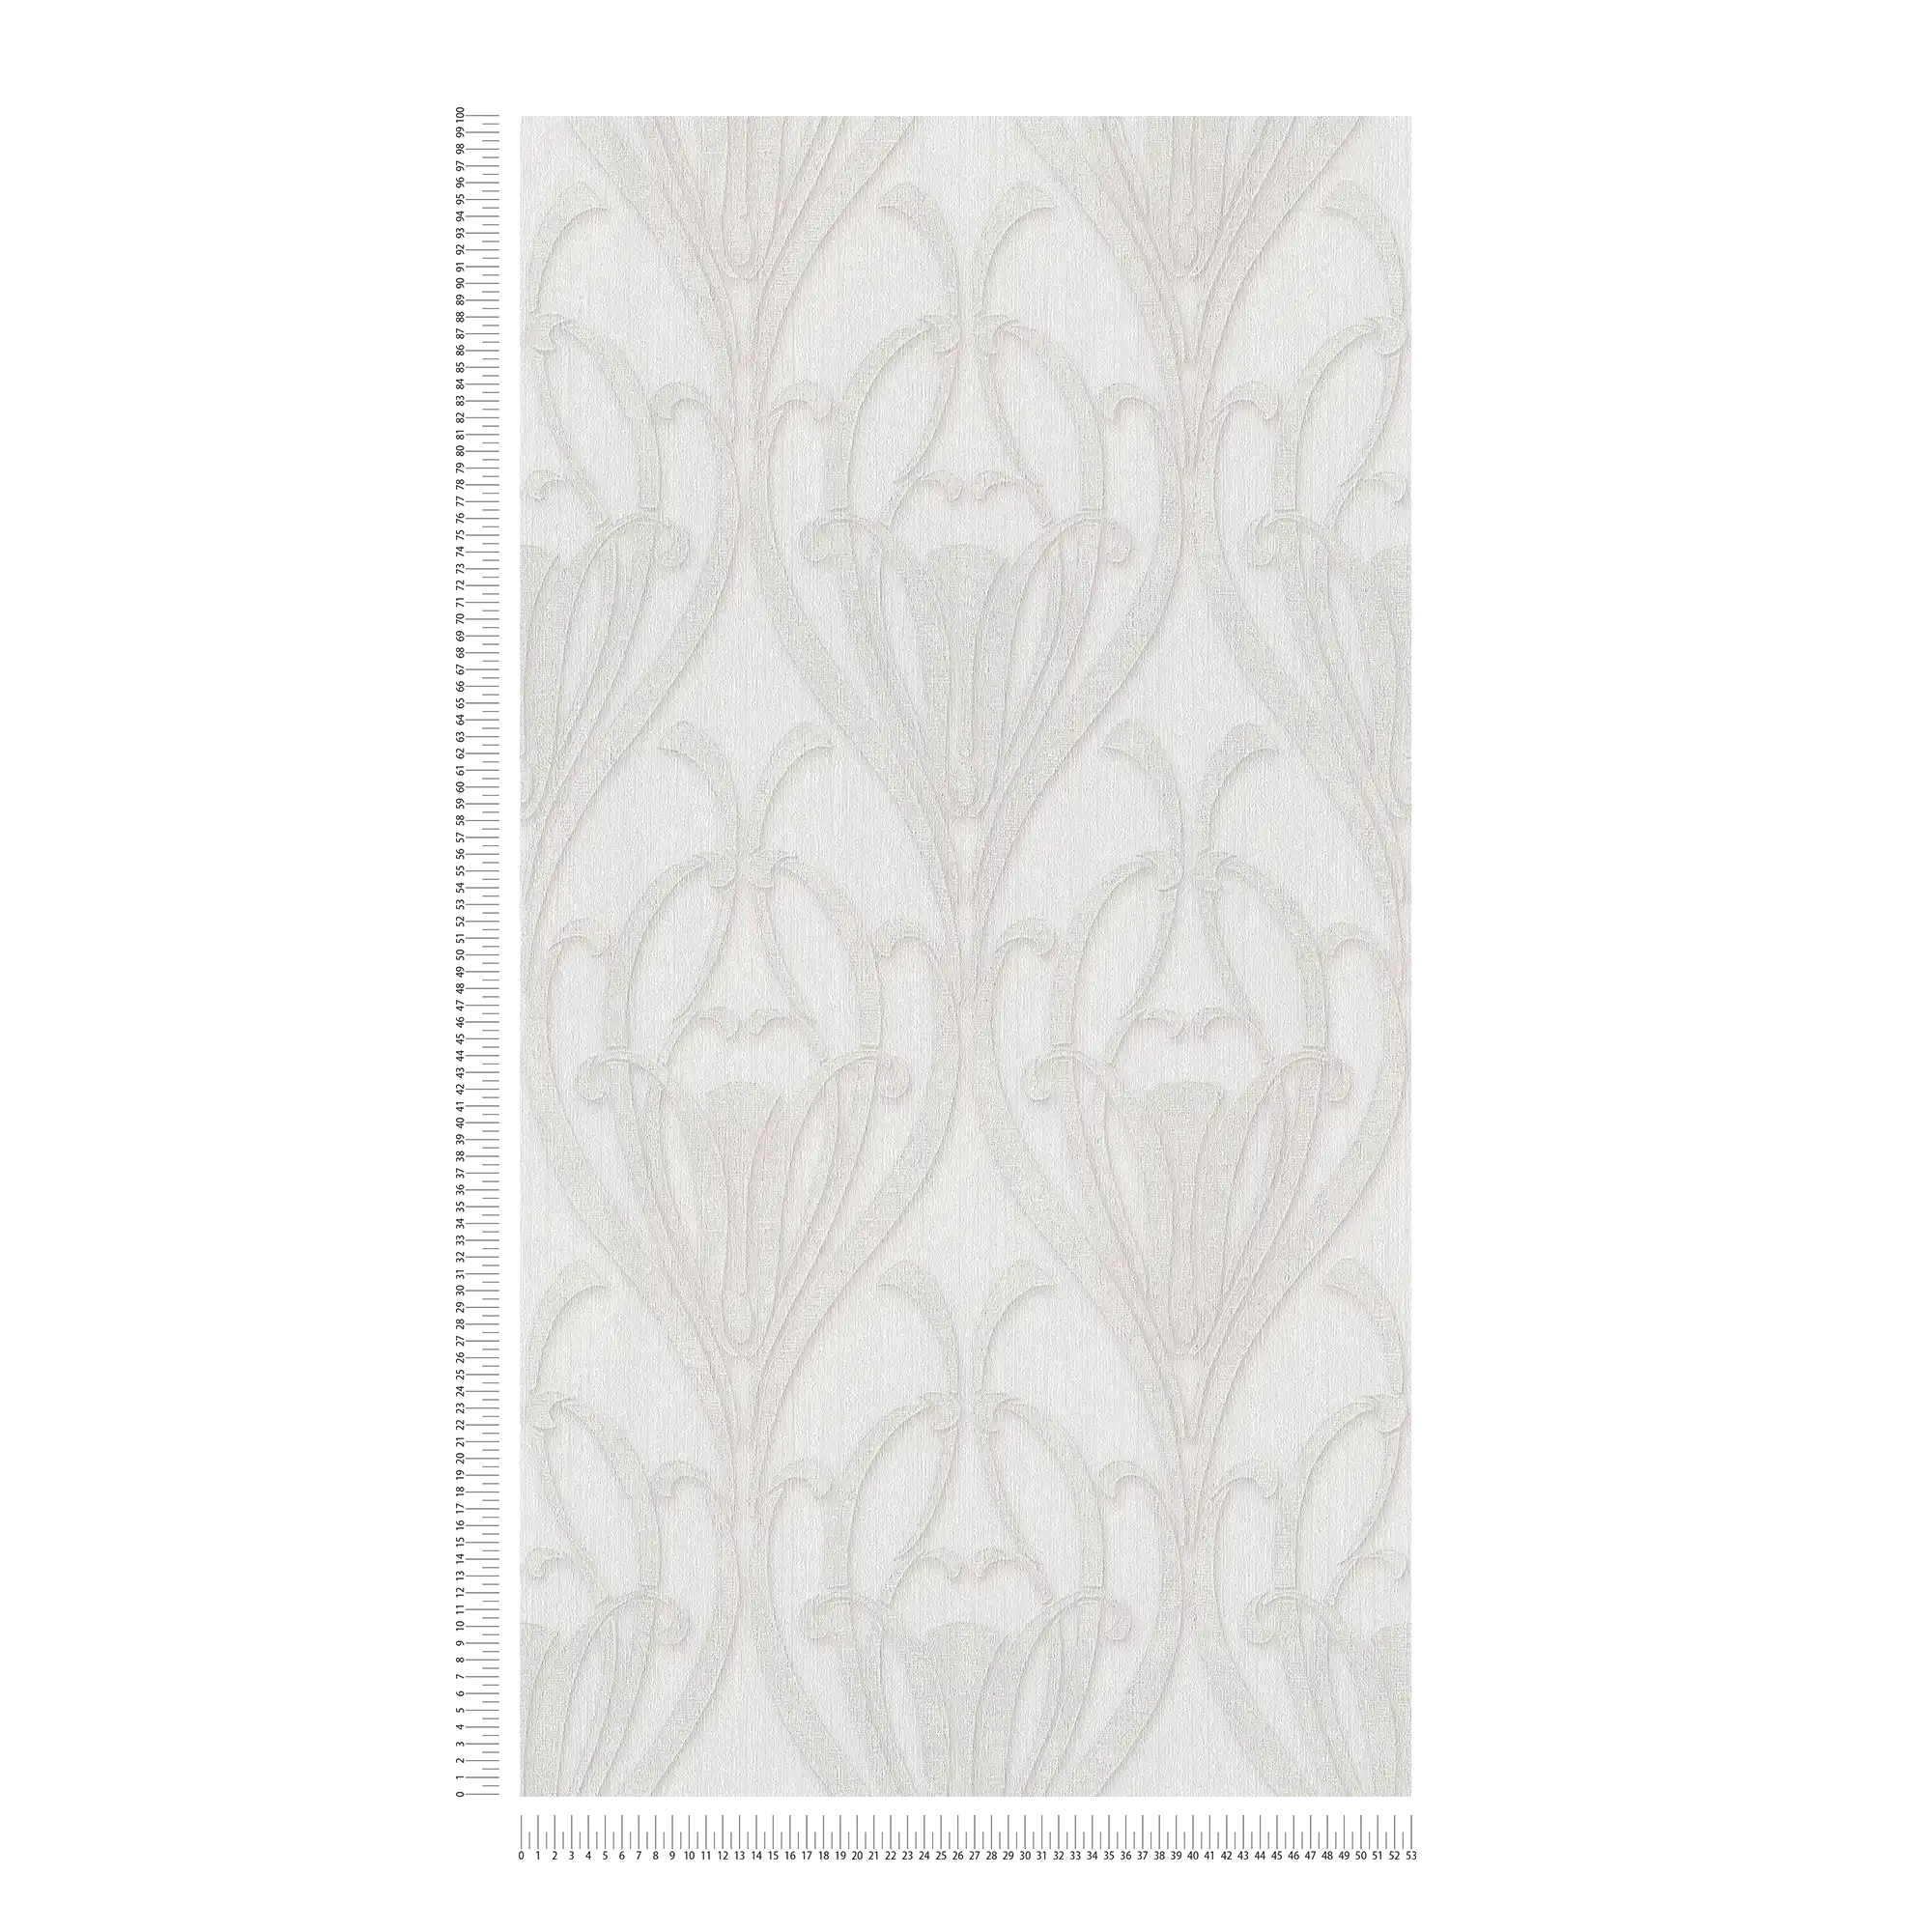             Art Deco Tapete mit Ornament Muster & Textiloptik
        